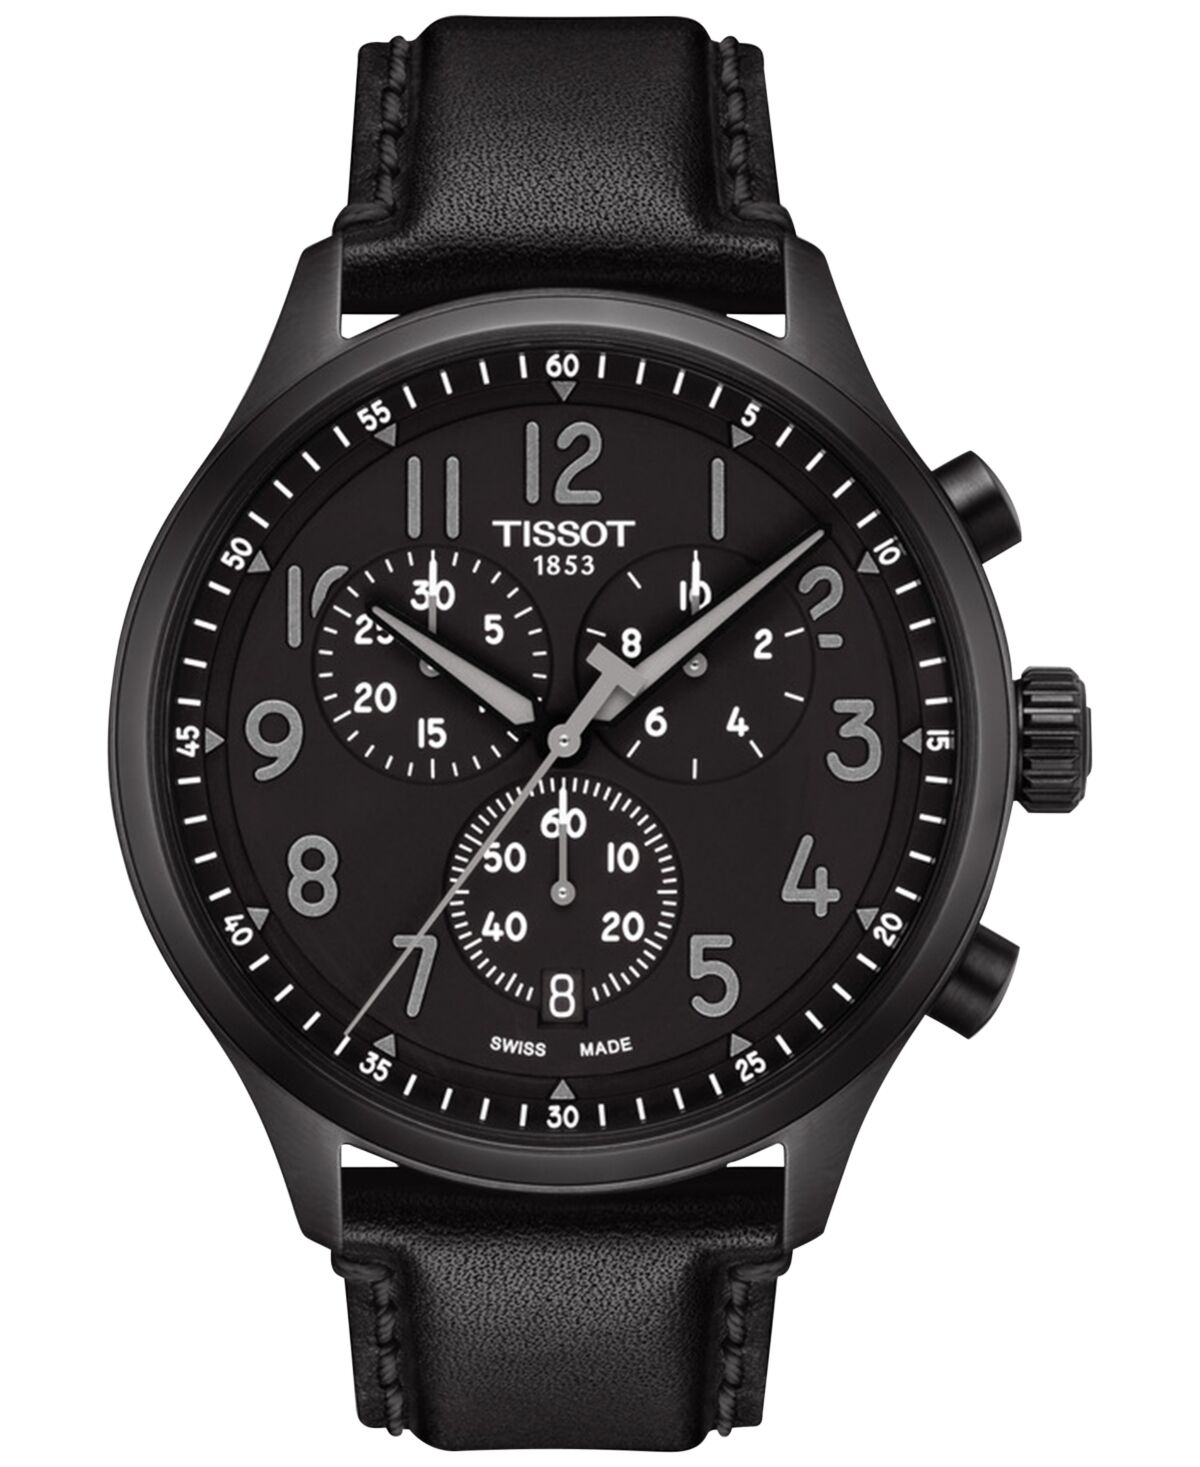 Tissot Men's Swiss Chronograph Xl Vintage Black Leather Strap Watch 45mm - Black